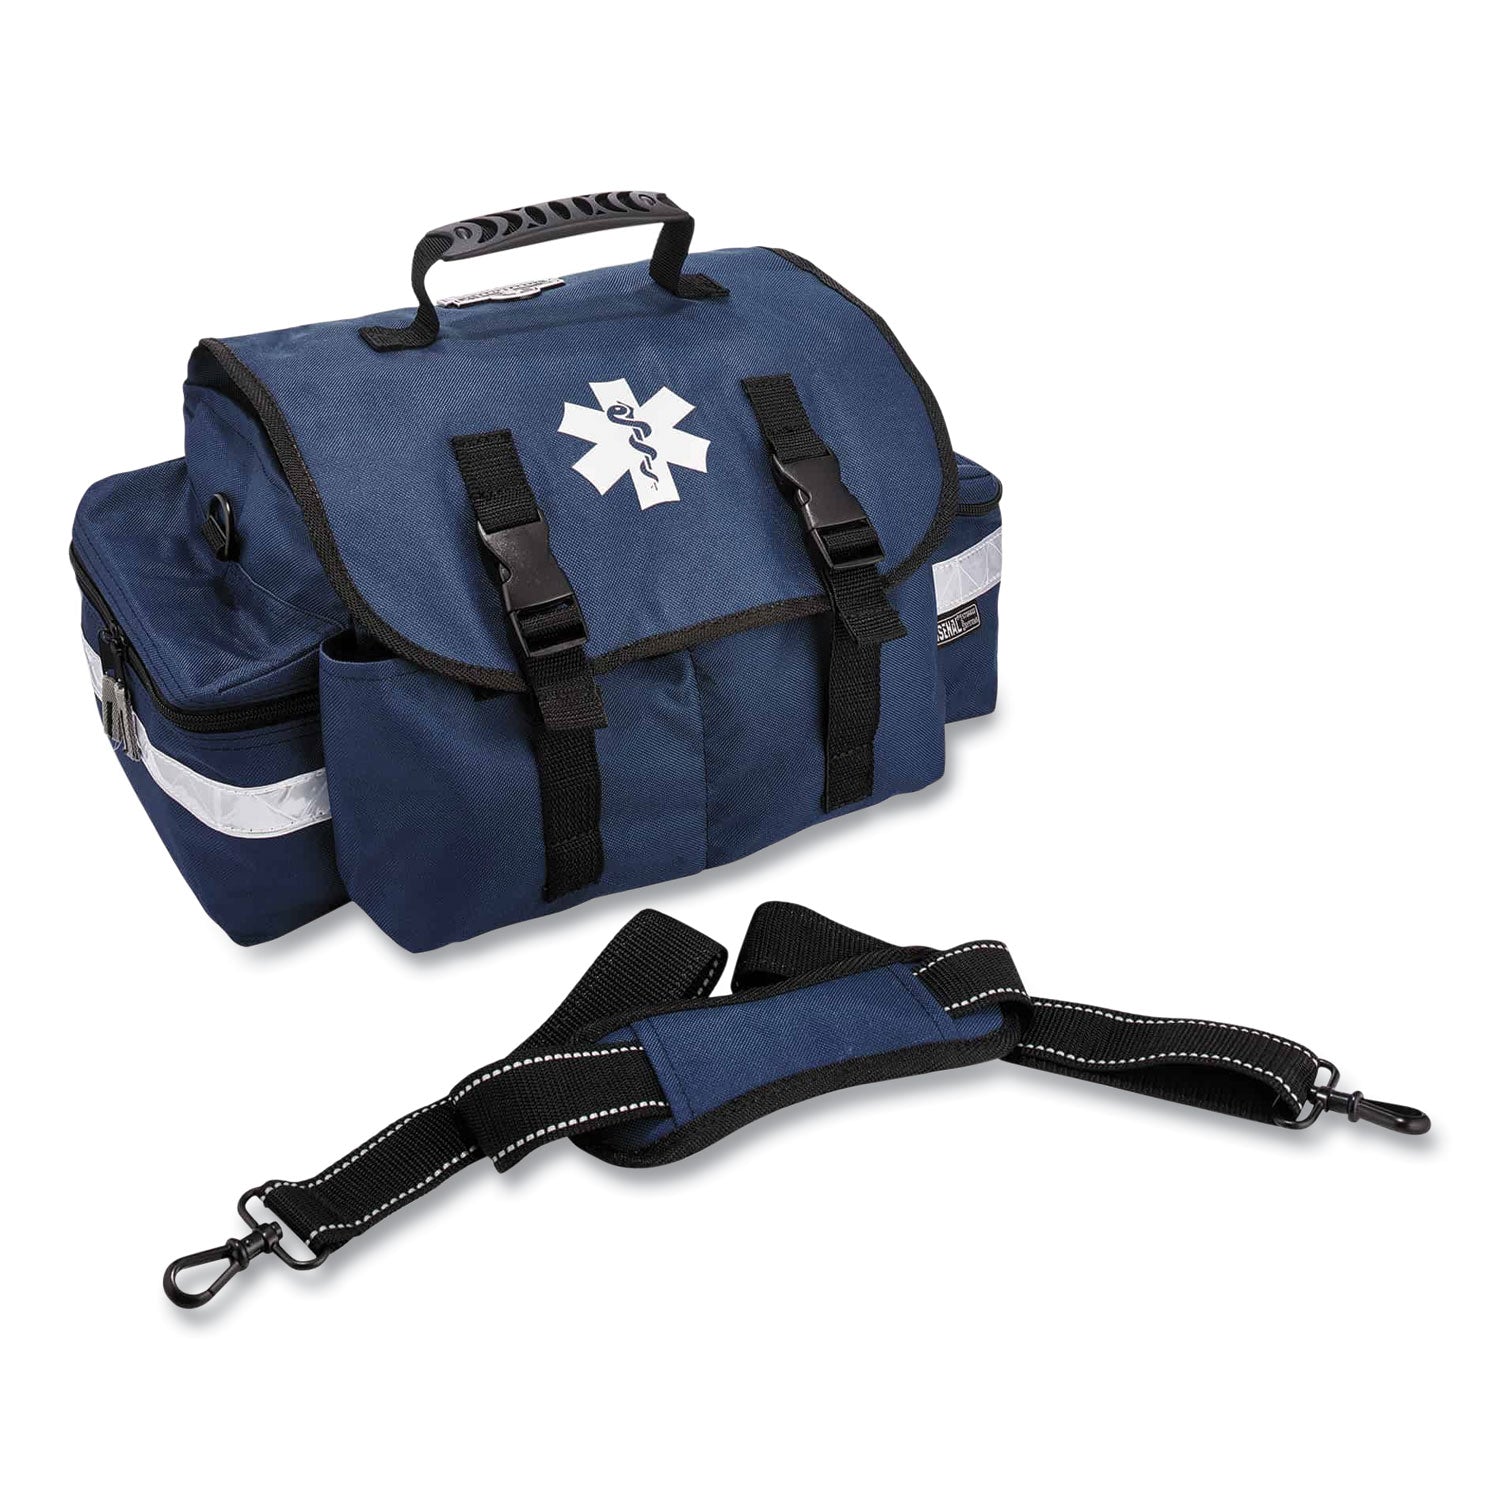 arsenal-5210-trauma-bag-small-10-x-165-x-7-blue-ships-in-1-3-business-days_ego13417 - 1